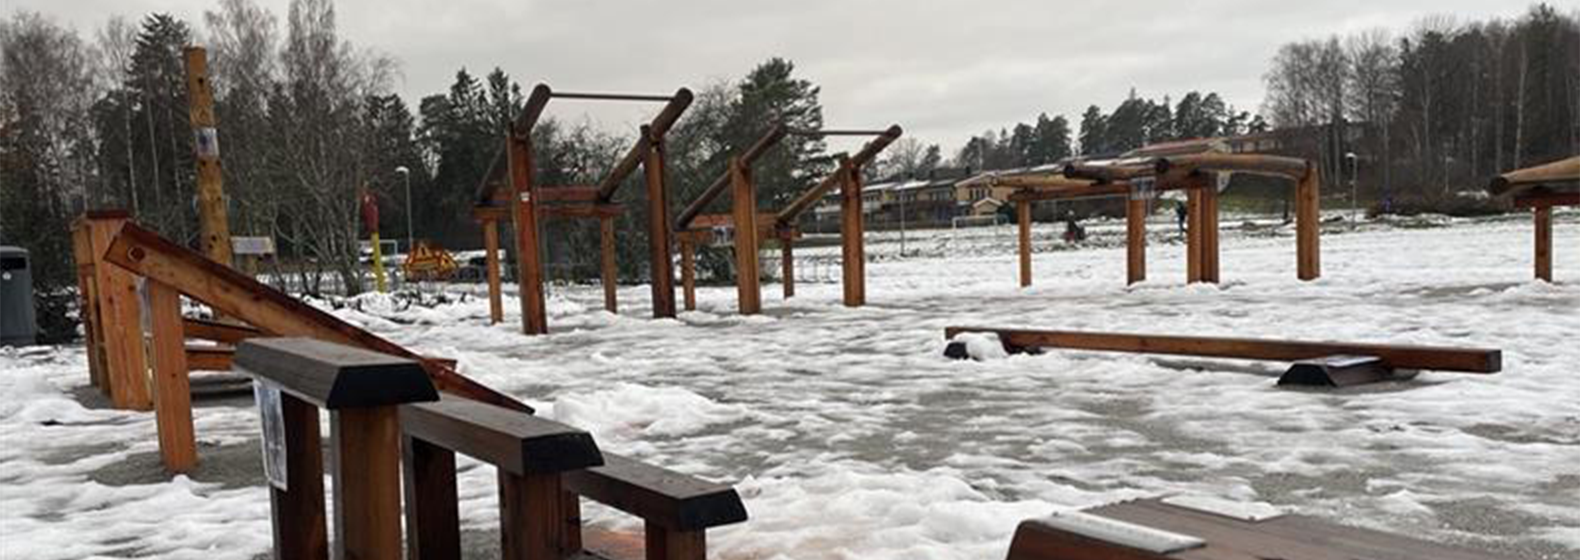 Ängsholmsparkens utegym i snö. 